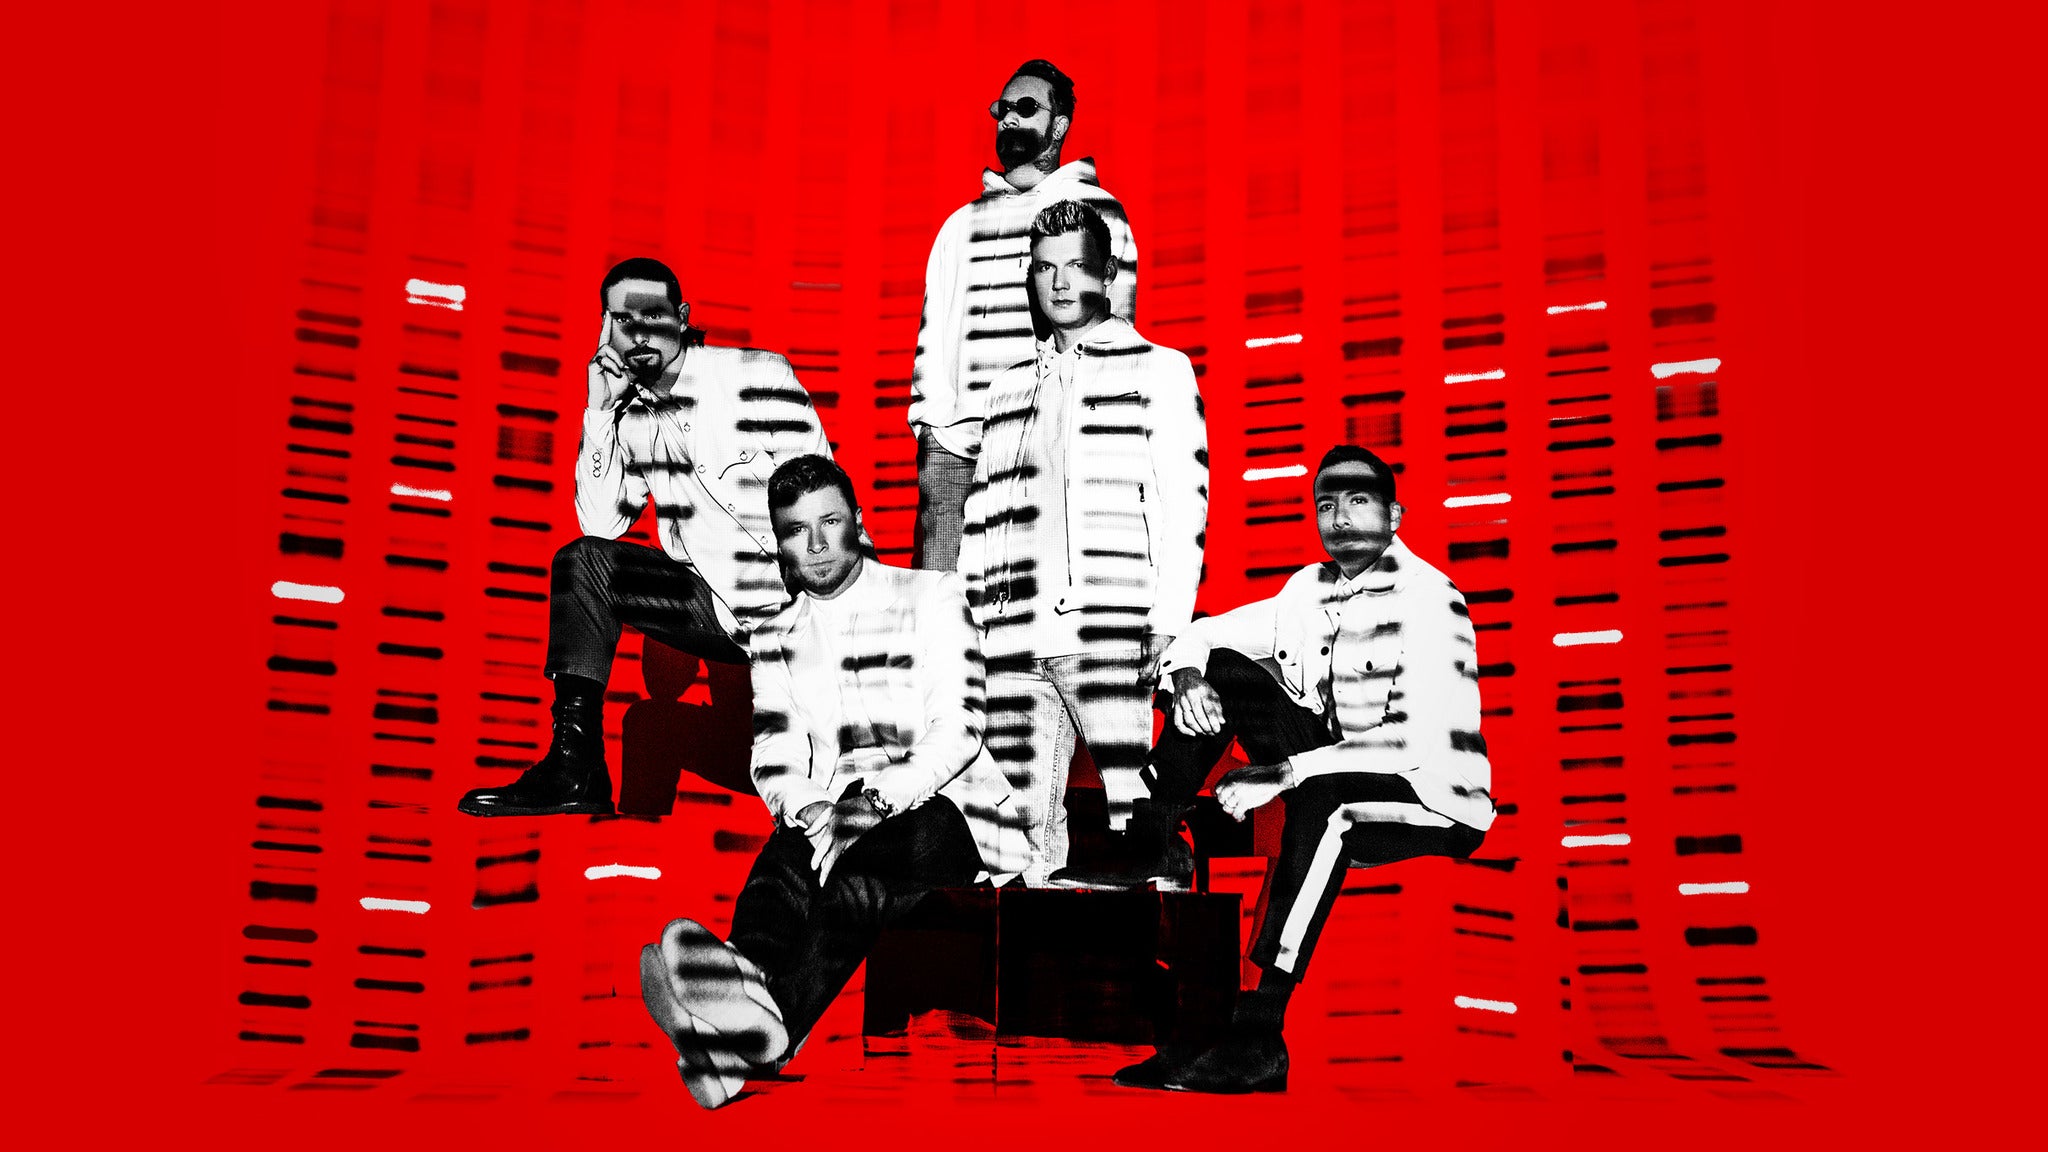 Backstreet Boys - A Very Backstreet Christmas Party in Las Vegas promo photo for Fan Club presale offer code